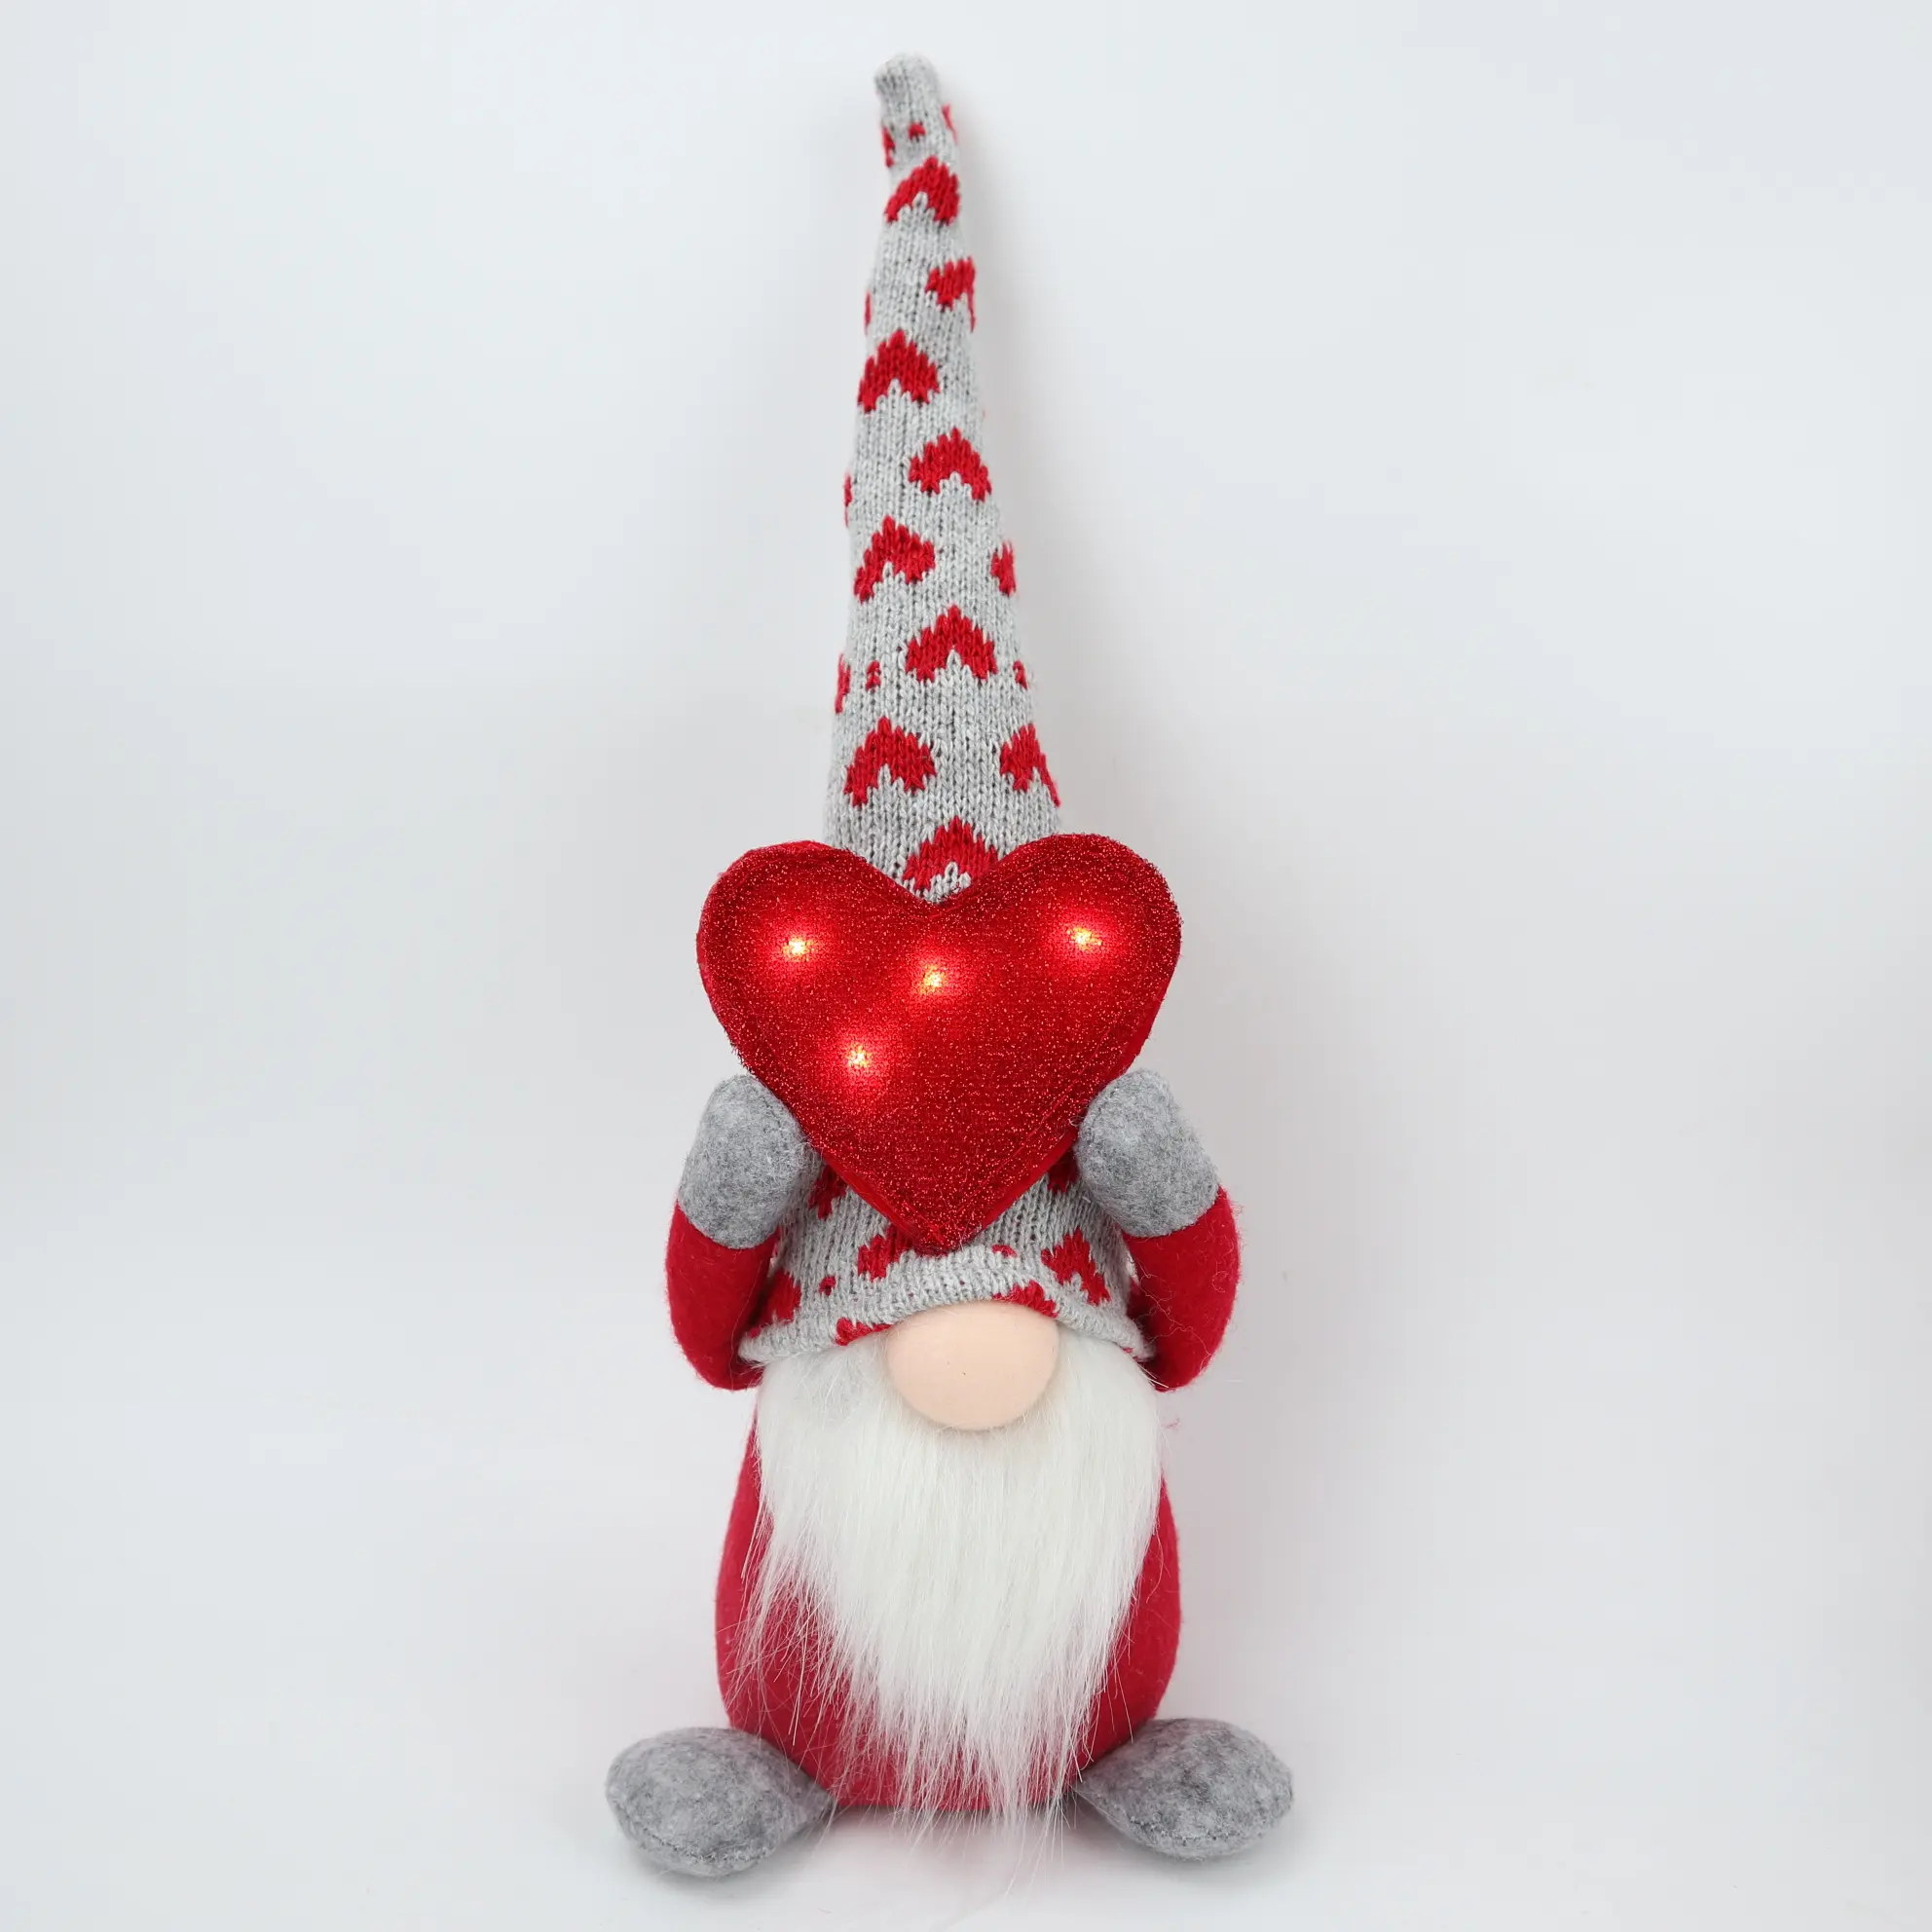 Cute Christmas classic Red Dwarf Christmas decoration Glowing Love Dwarf Plush dwarf with Led lights